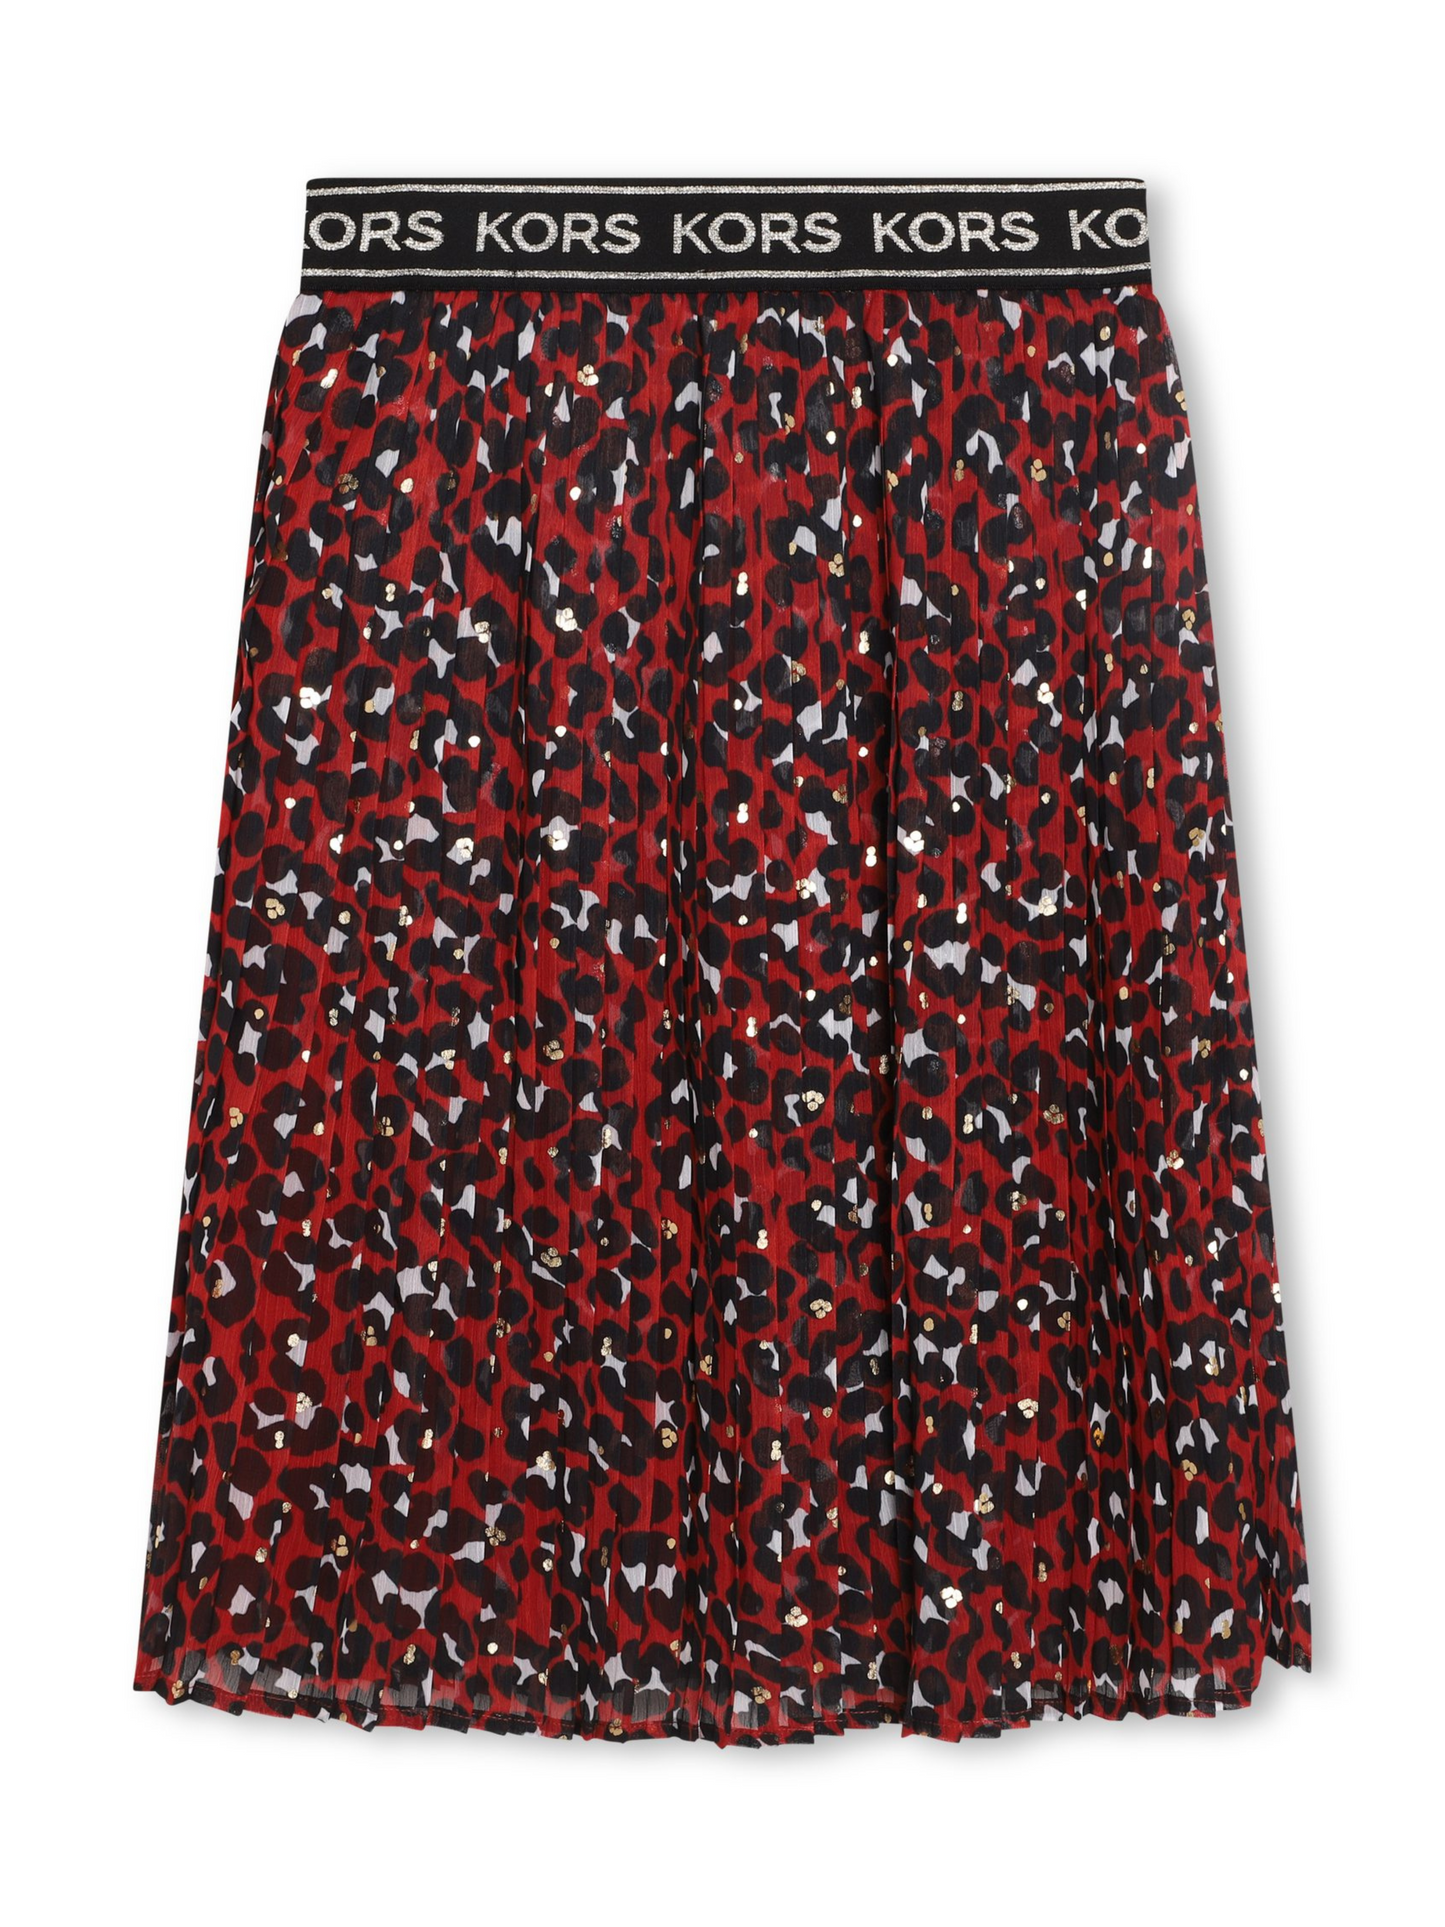 Michael Kors Red Pleated Printed Skirt _R13127-961